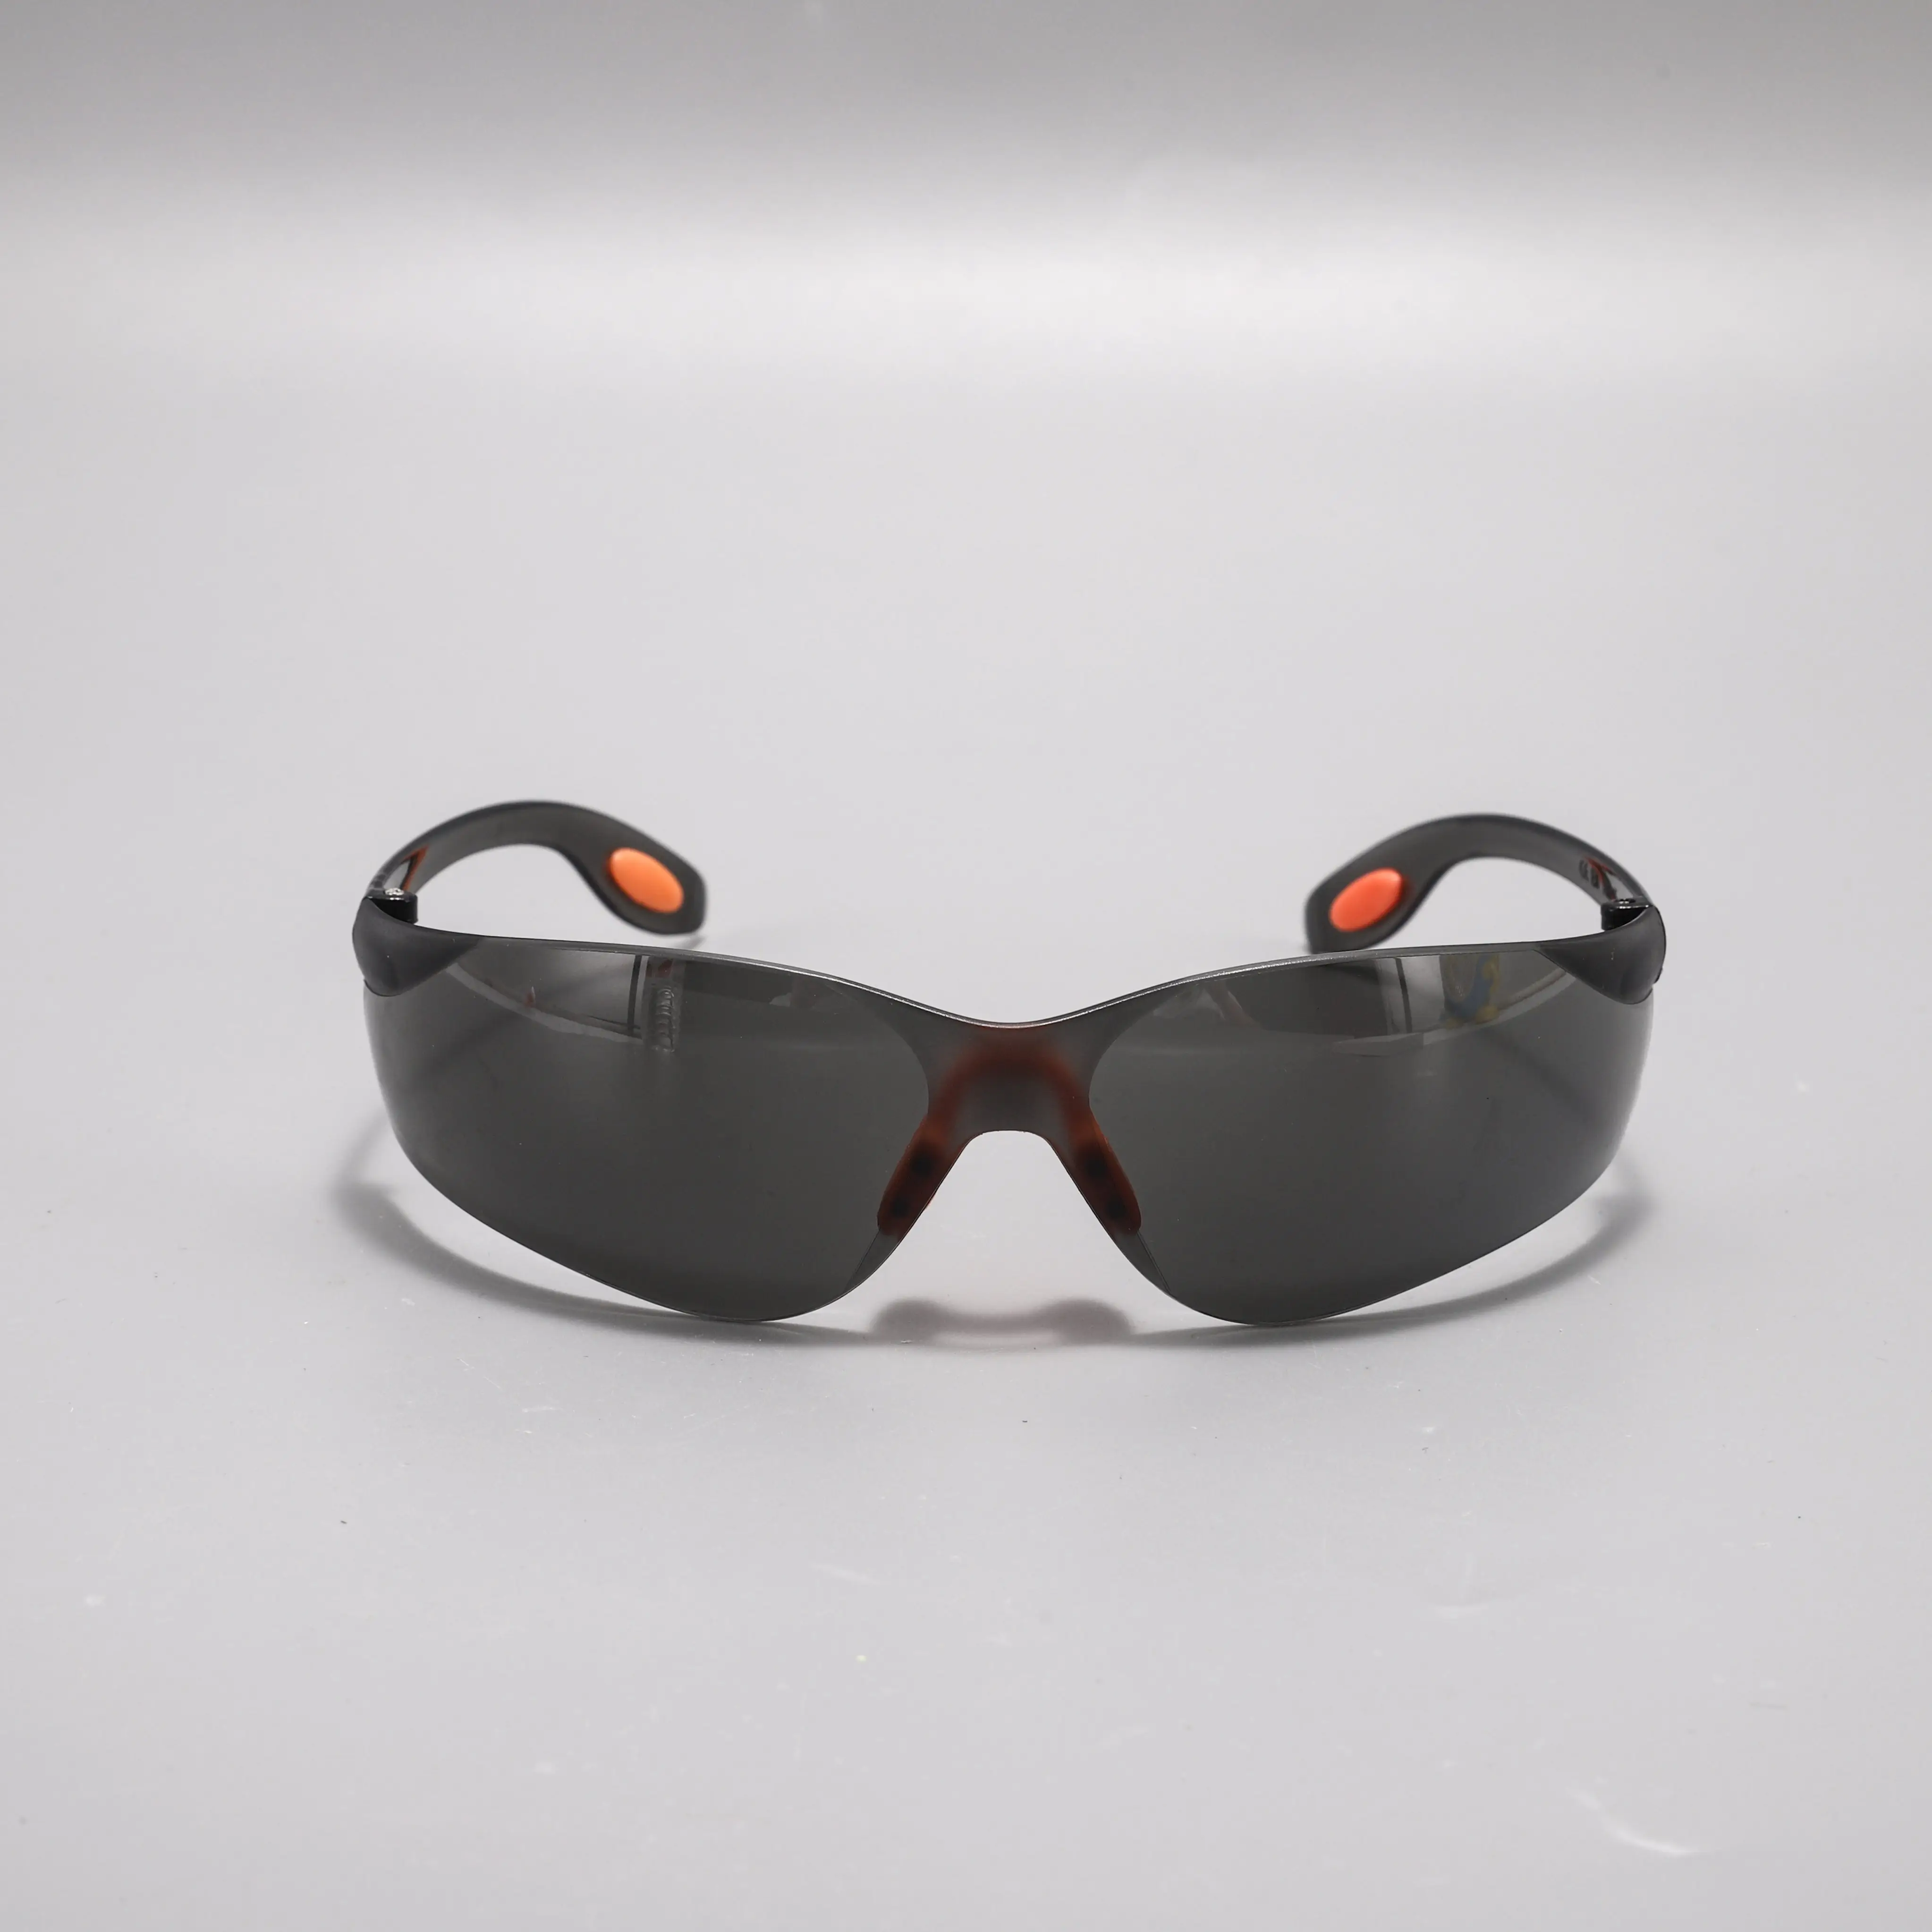 सस्ते लेजर सुरक्षा चश्मा एएनएसआई सीई औद्योगिक विरोधी यूवी नेत्र सुरक्षा चश्मा प्लास्टिक वेल्डिंग Eyewear चश्मा सुरक्षात्मक